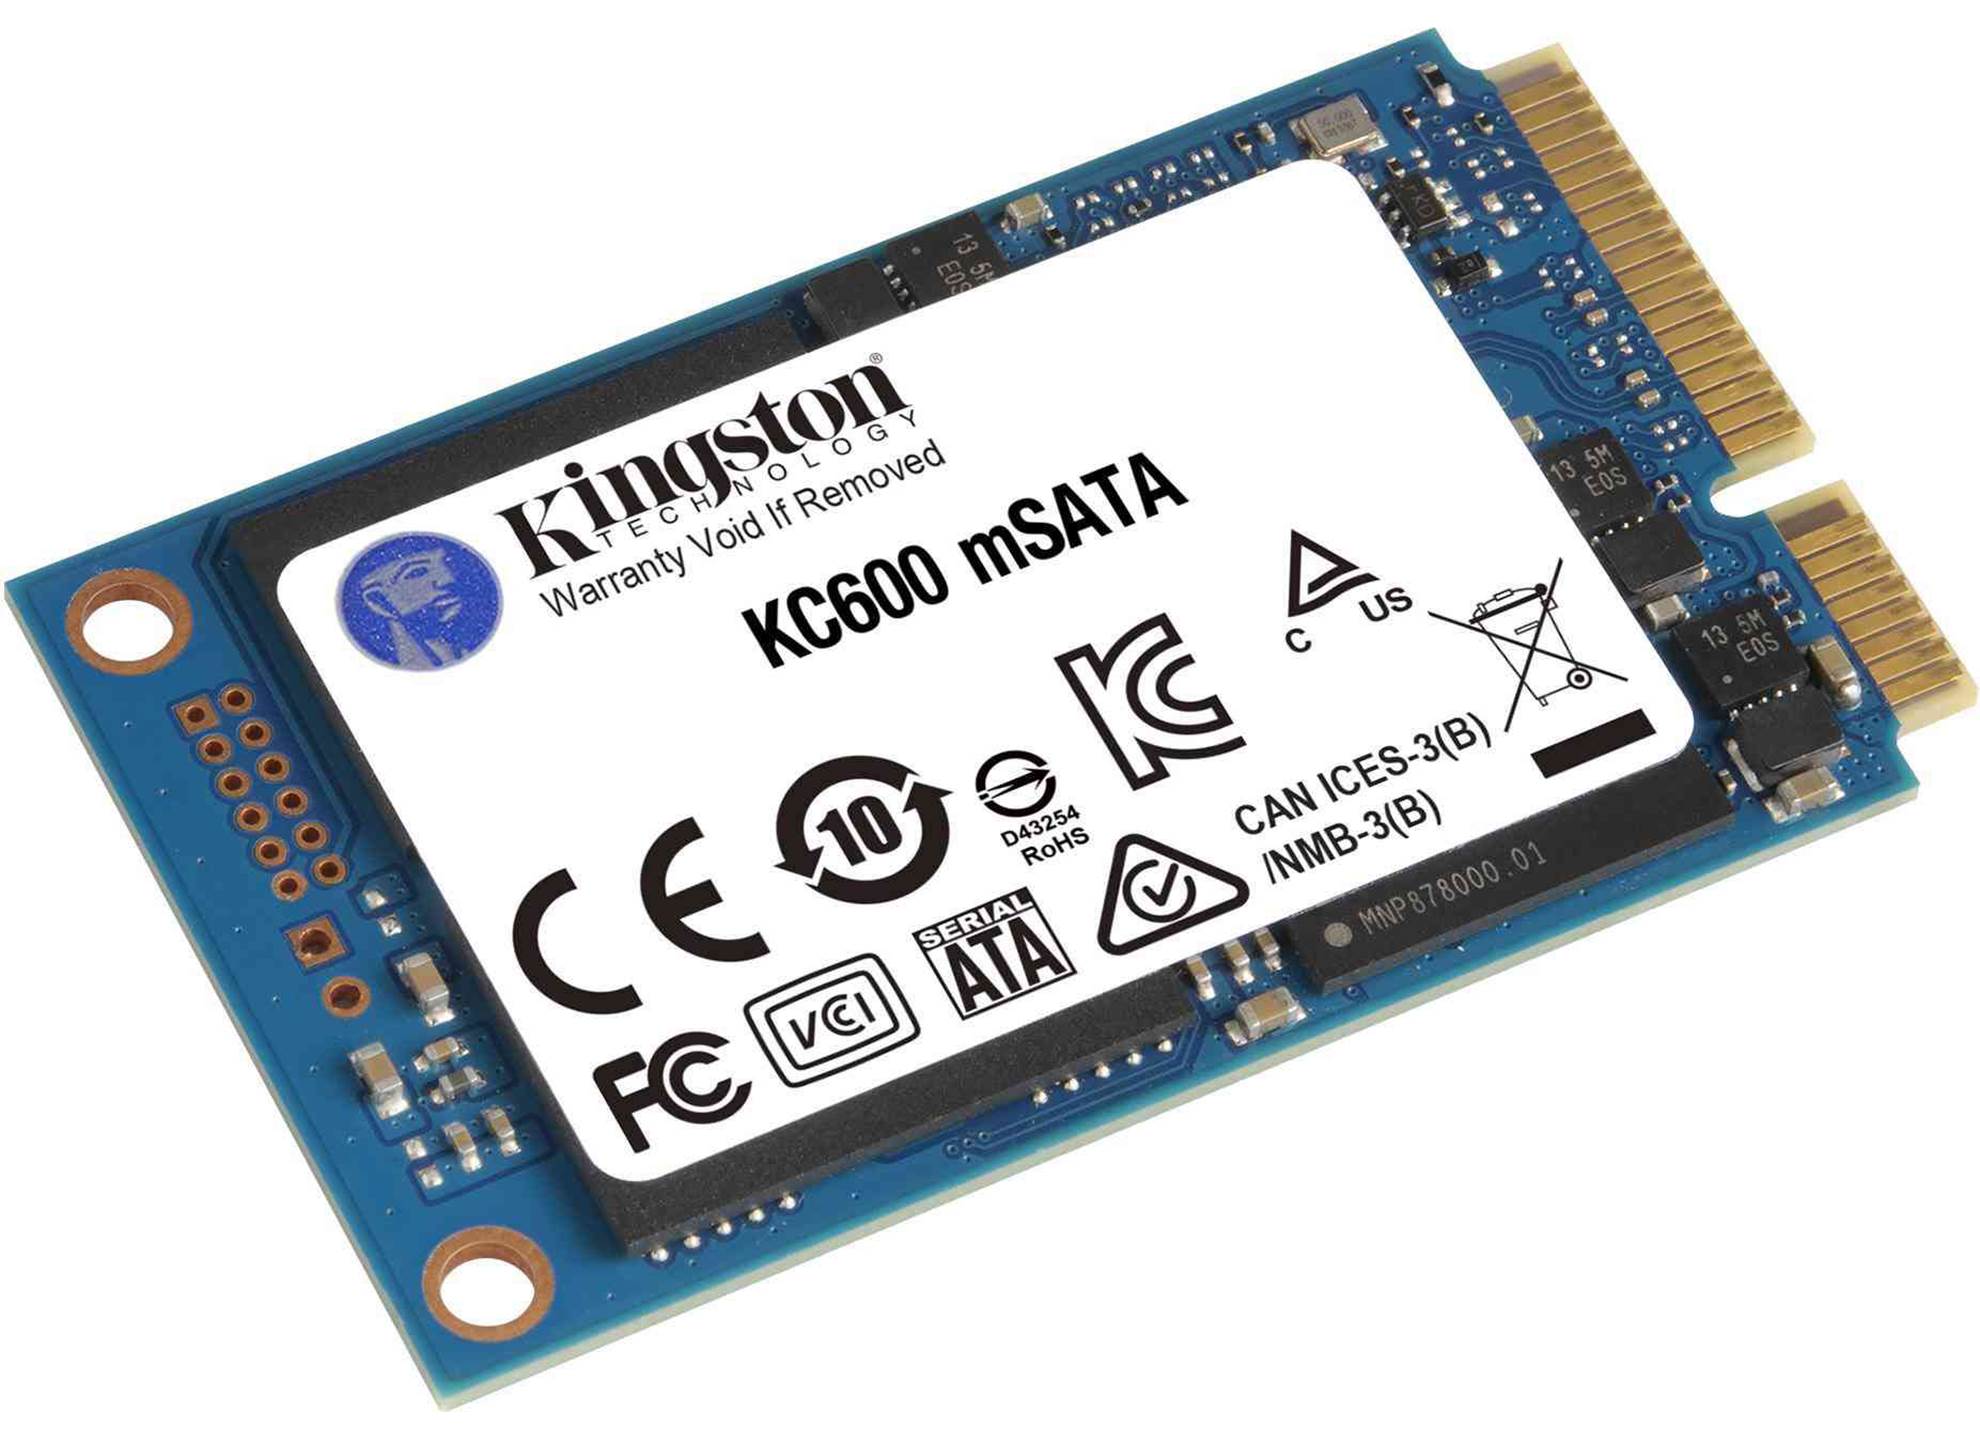 KC600 SATA3 mSATA SSD 1024GB